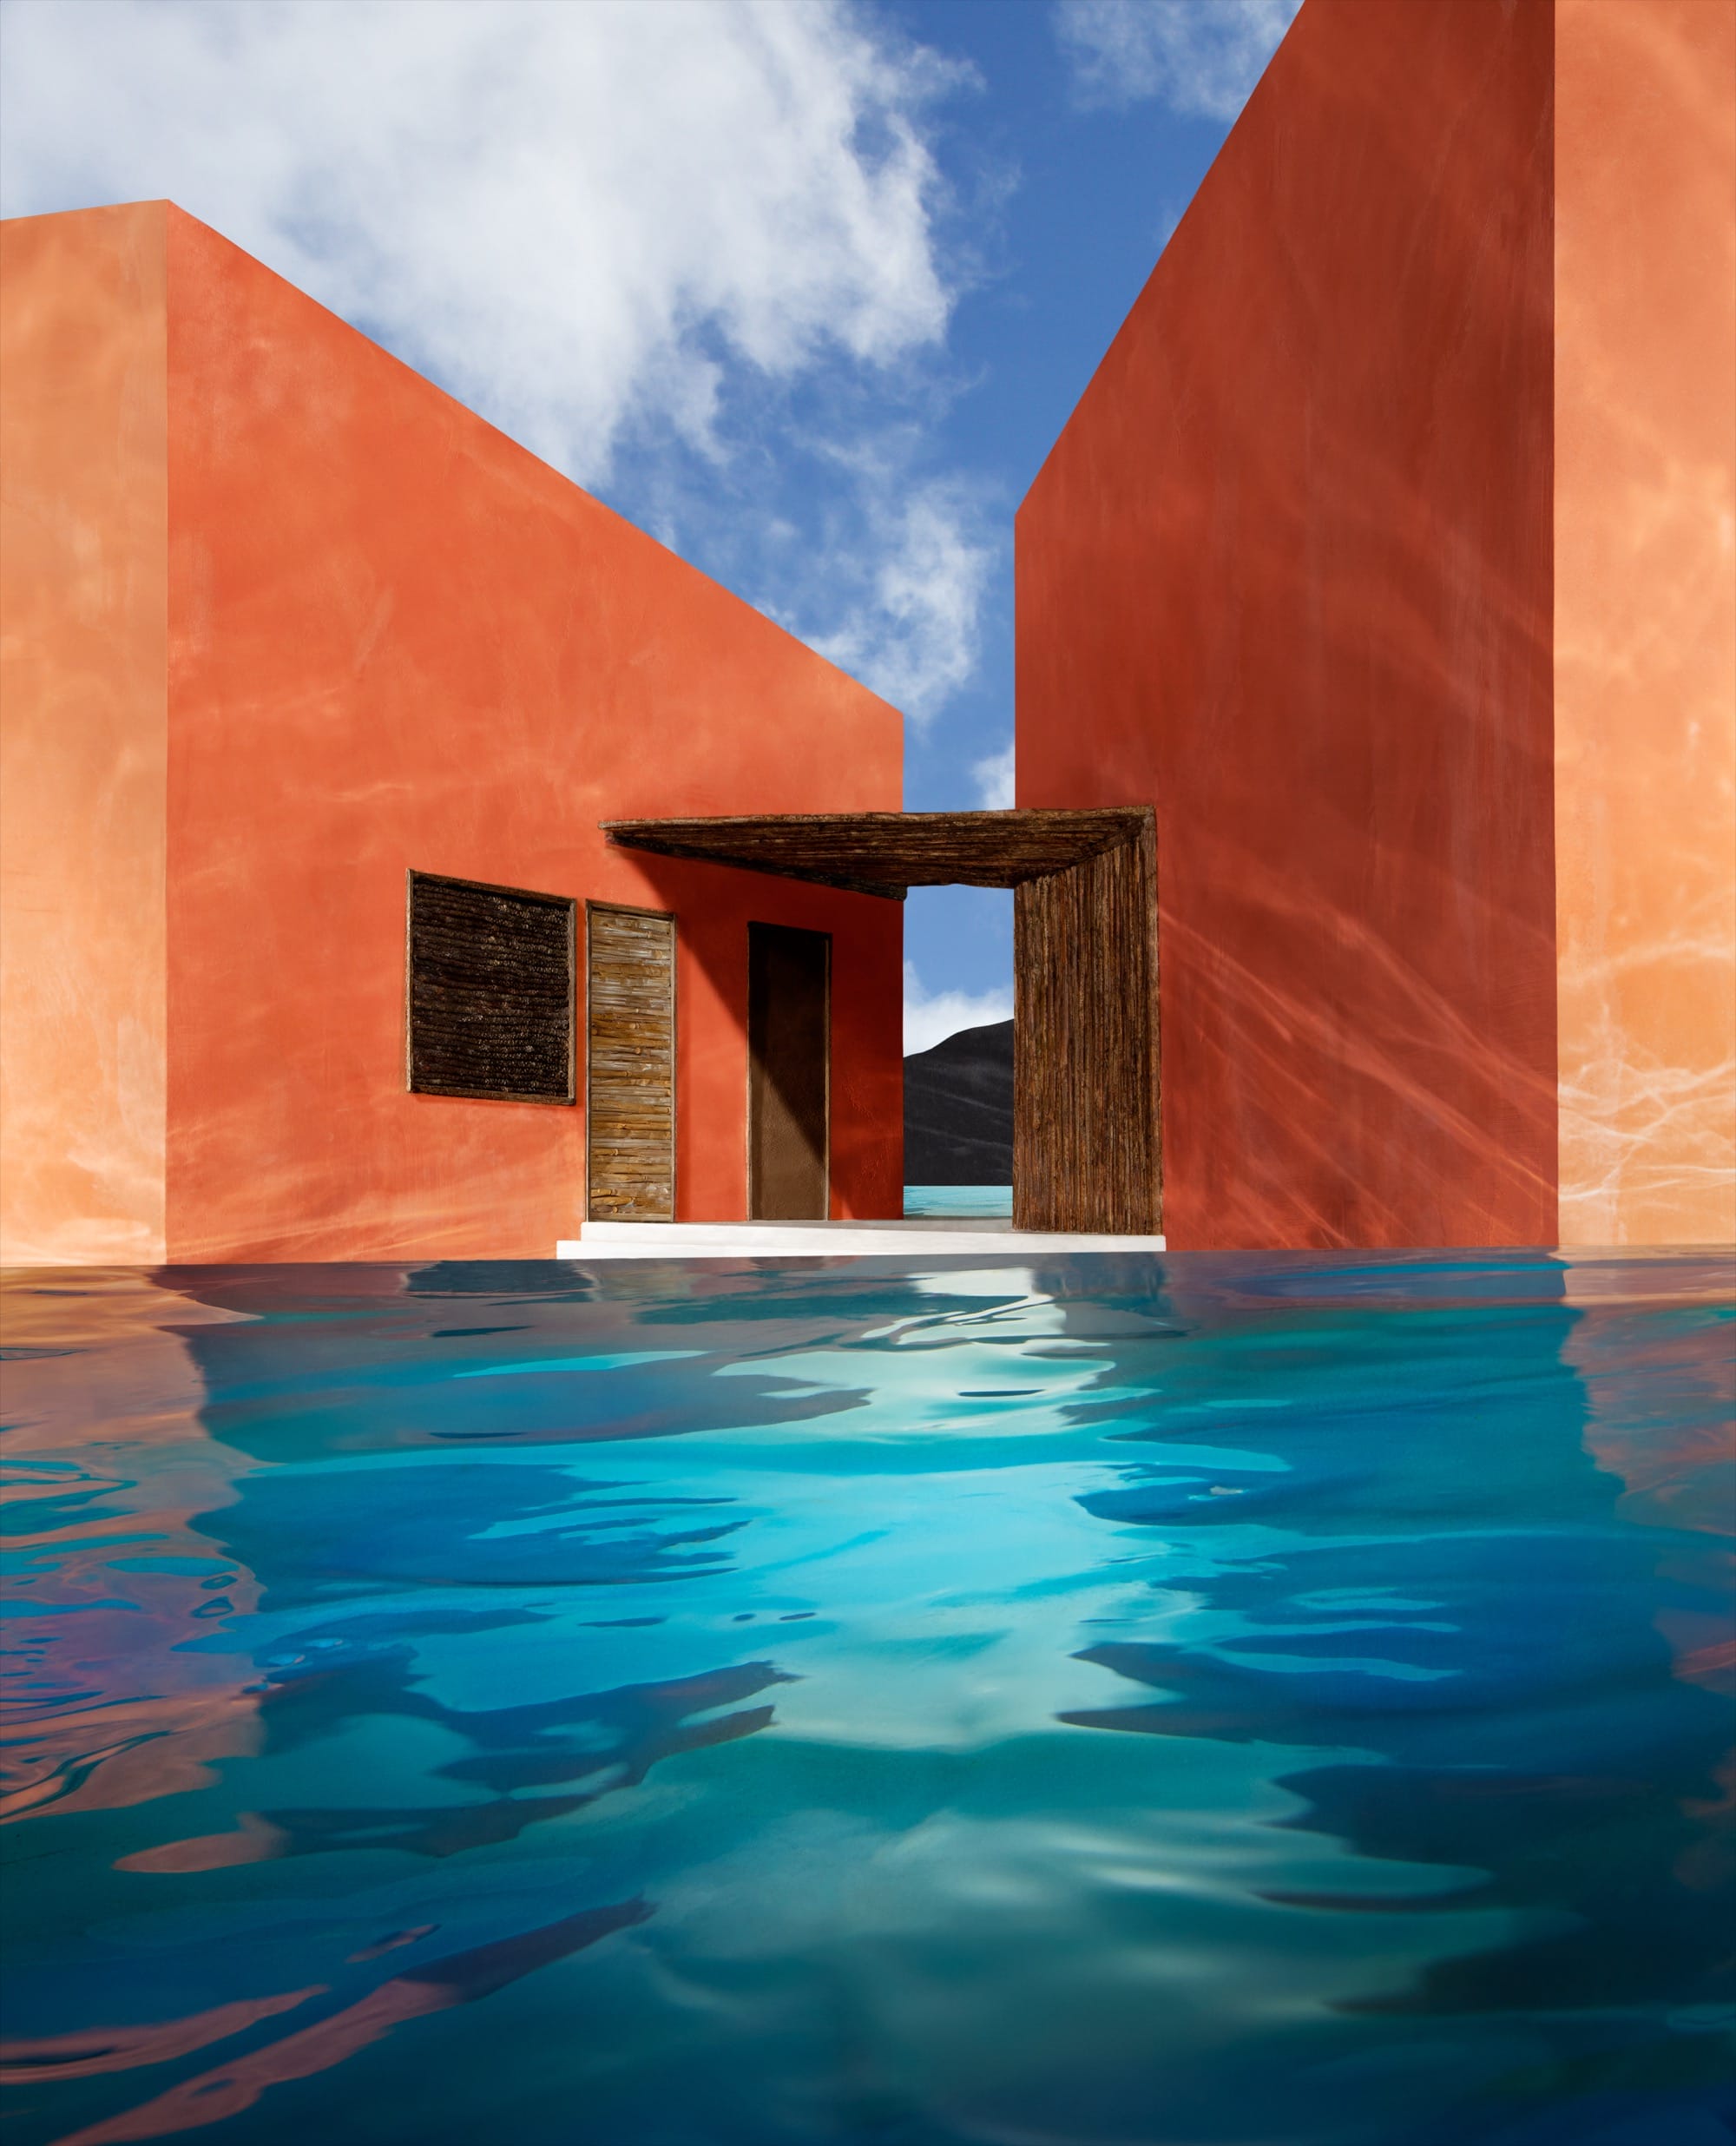 water rises around an orange, geometric architectural model